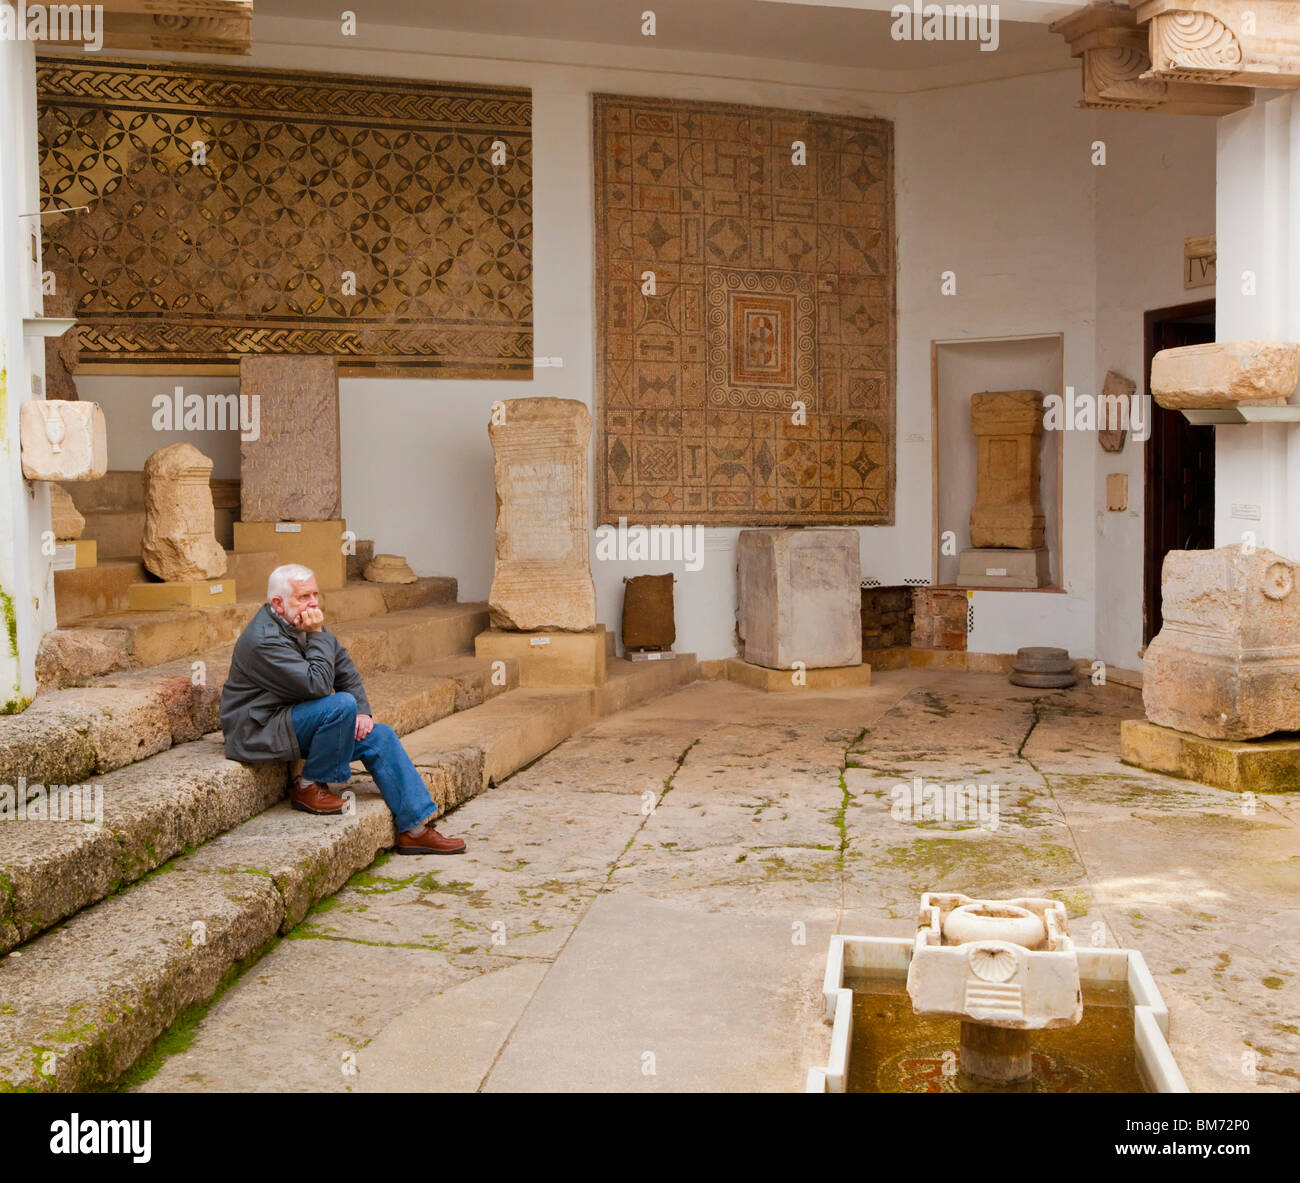 Visitor contemplating Roman antiquities in Museo arqueologico y etnologic, Cordoba, Cordoba Province, Spain. Stock Photo